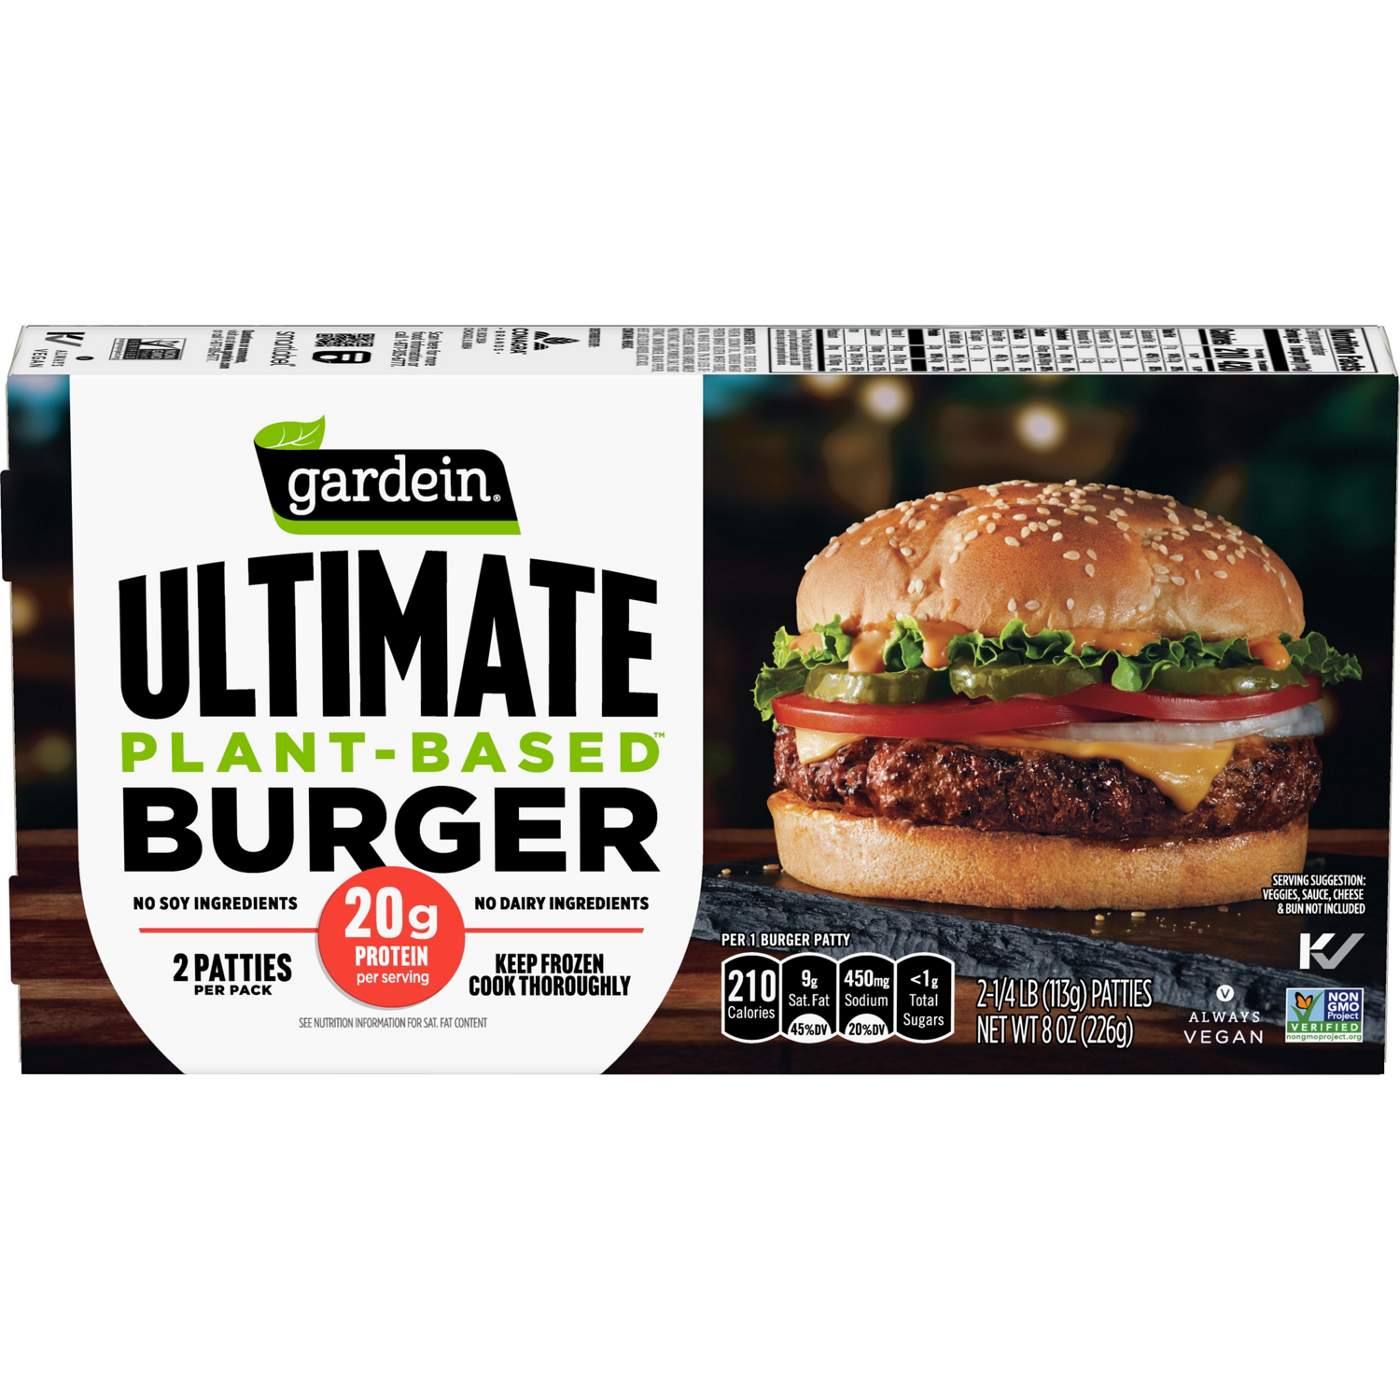 Gardein Ultimate Plant-Based Vegan Burger; image 1 of 7